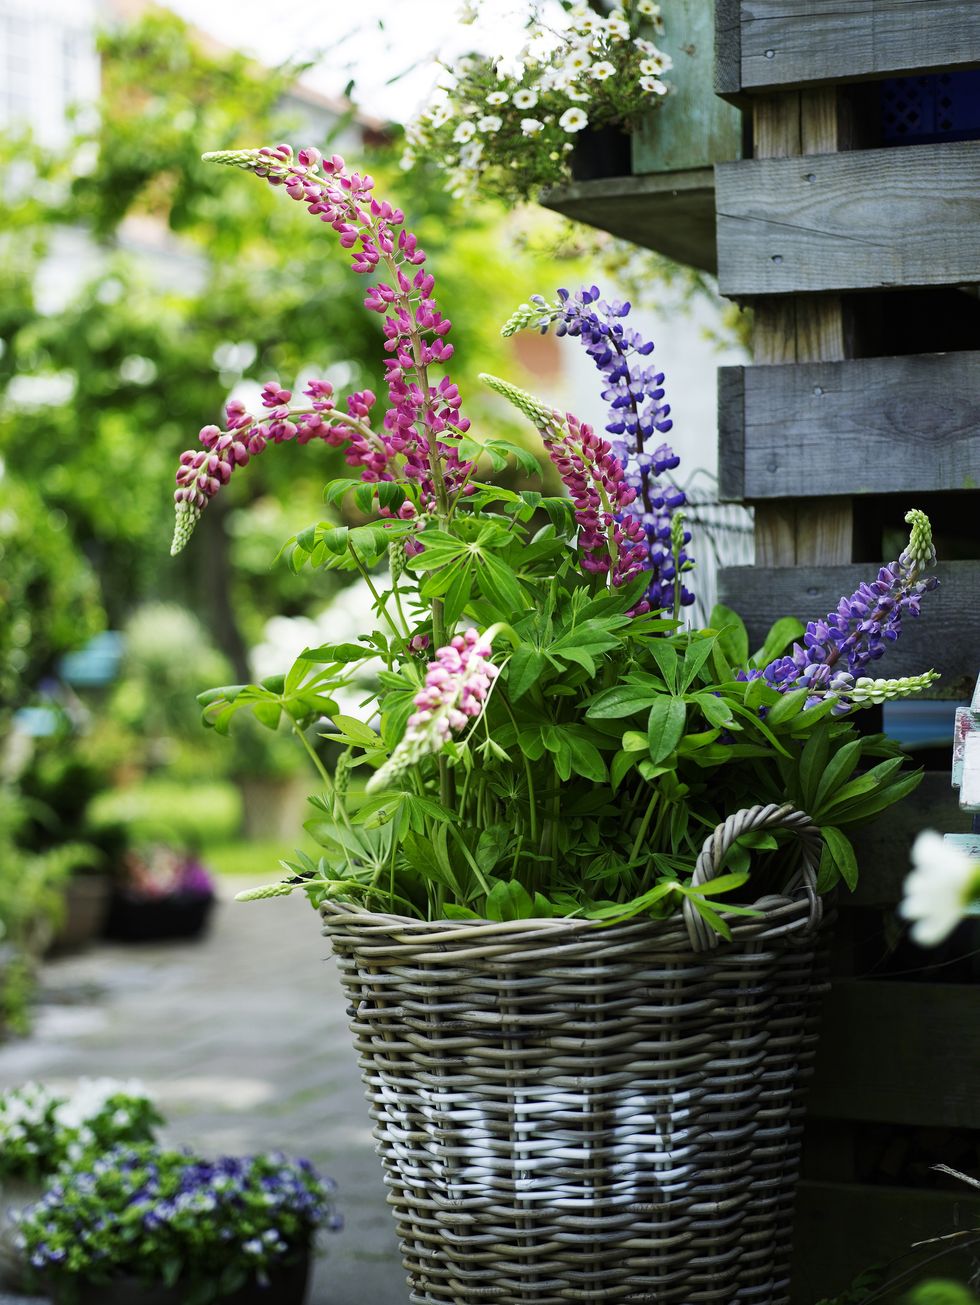 Flowering lupins in rustic wicker basket in garden